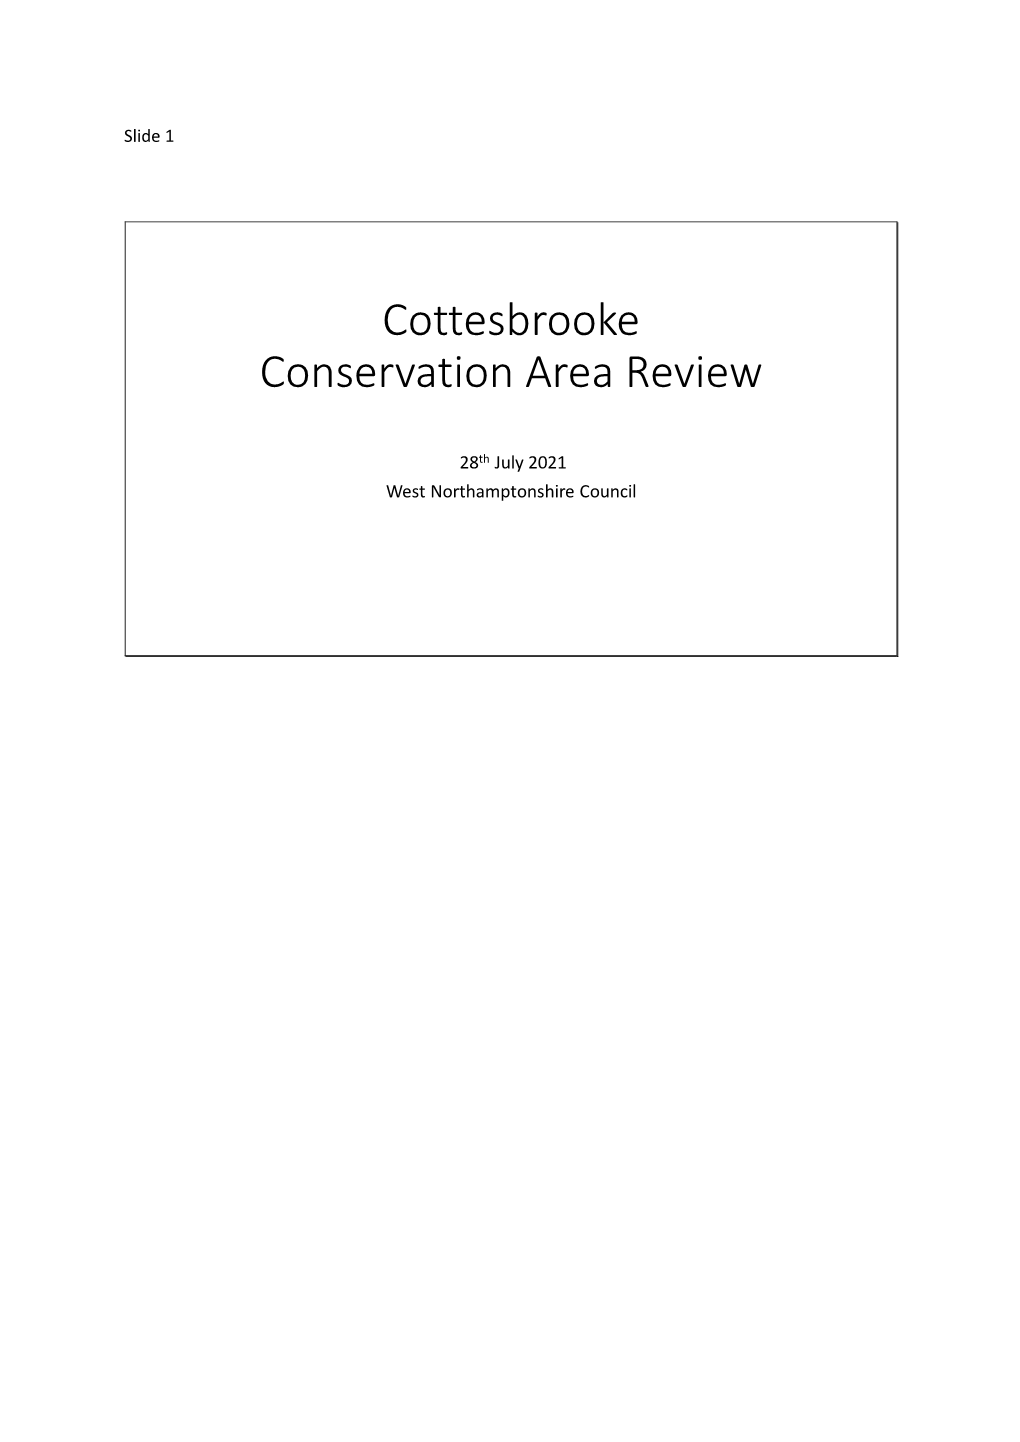 Cottesbrooke Conservation Area Review